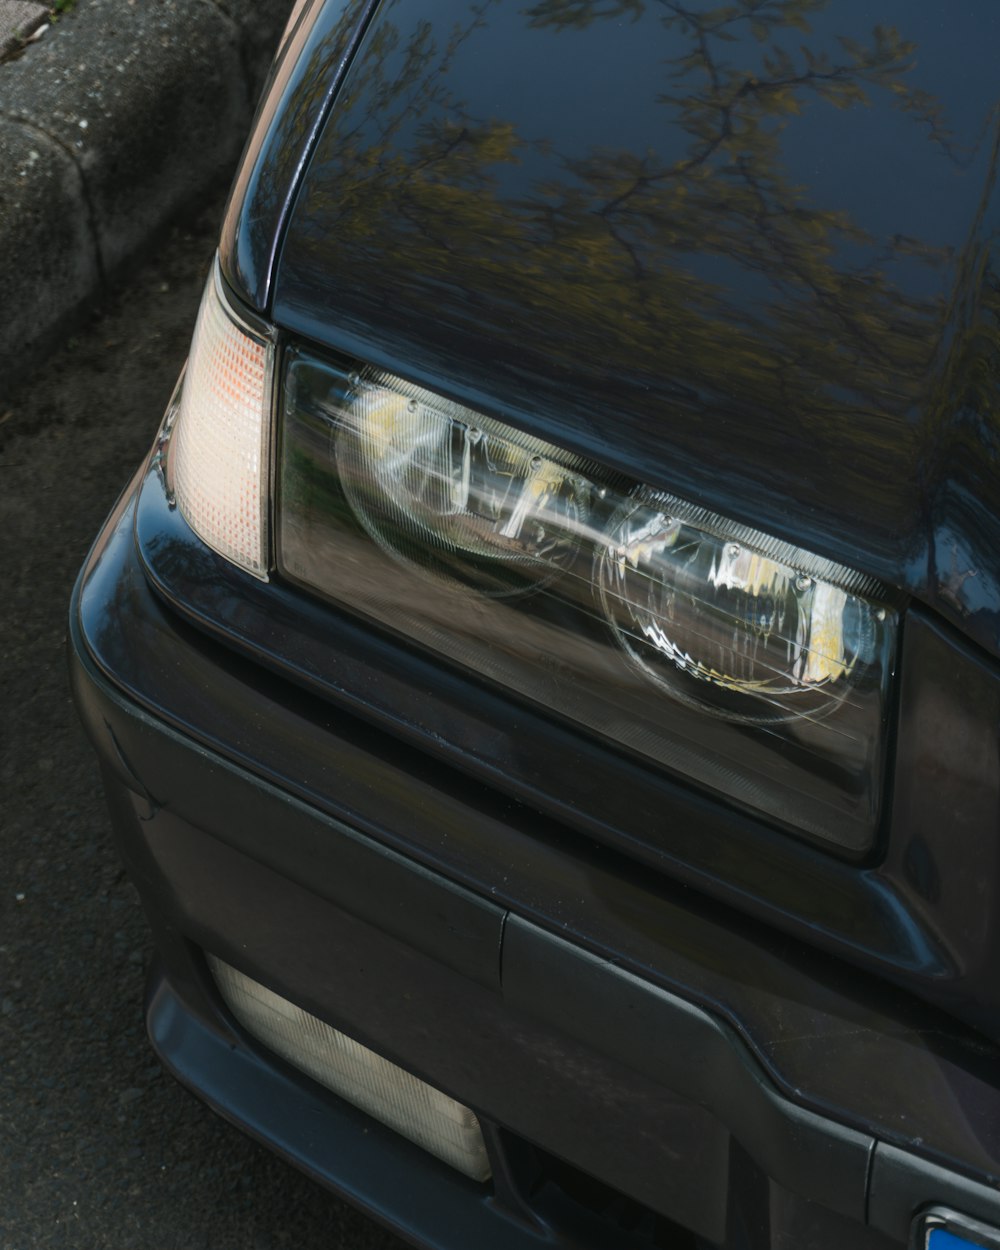 a close up of a car headlight on a street